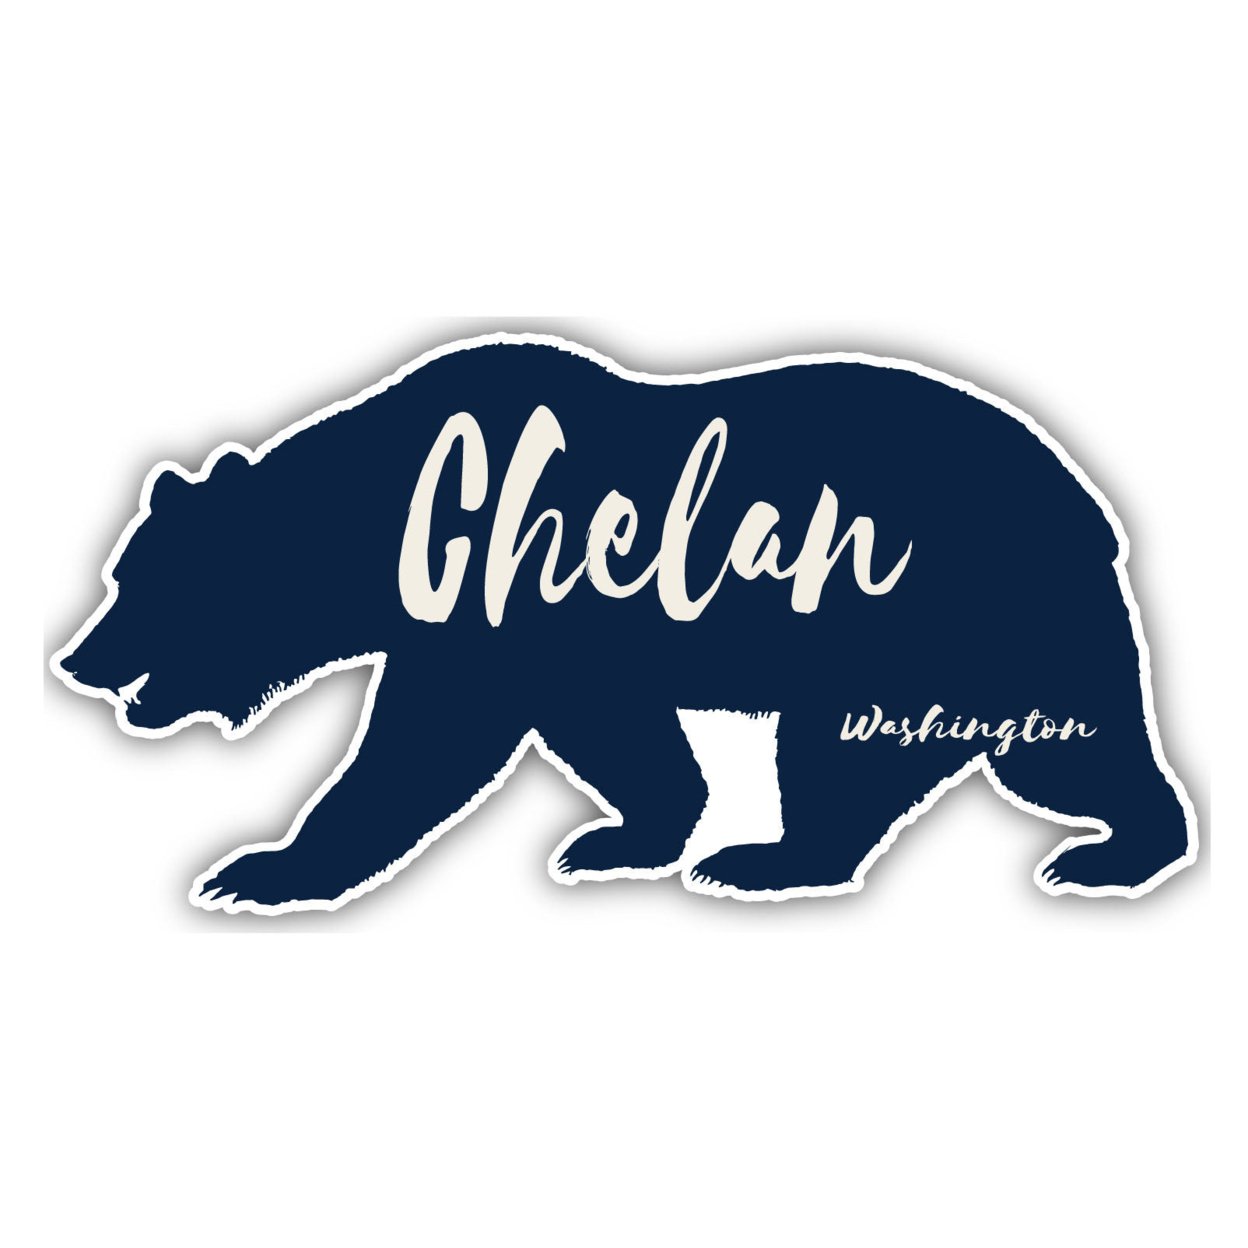 Chelan Washington Souvenir Decorative Stickers (Choose Theme And Size) - 4-Pack, 4-Inch, Bear